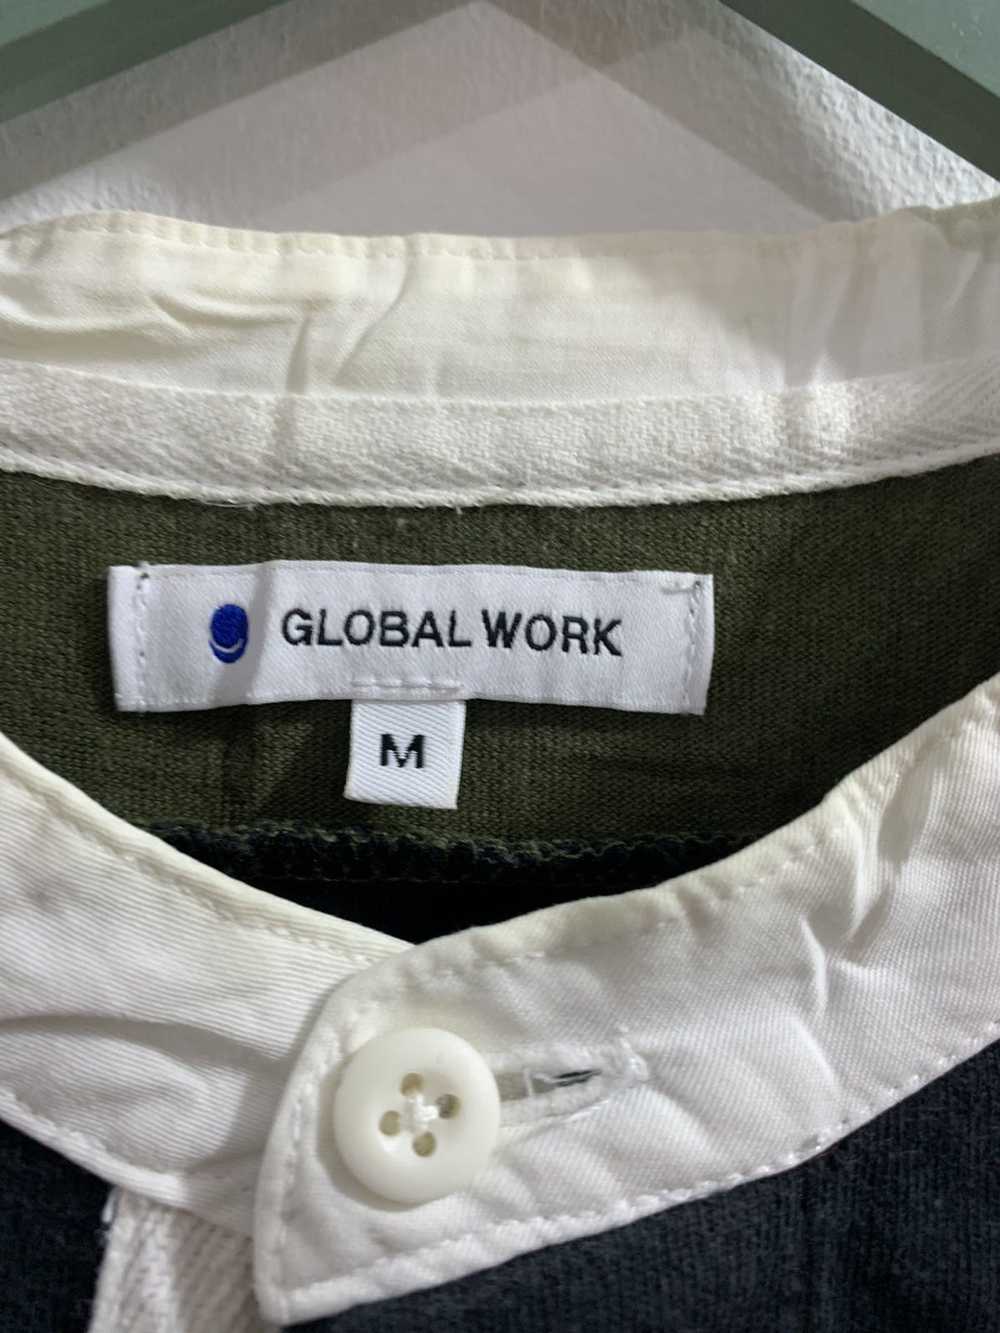 Global Work × Japanese Brand Global work - image 4